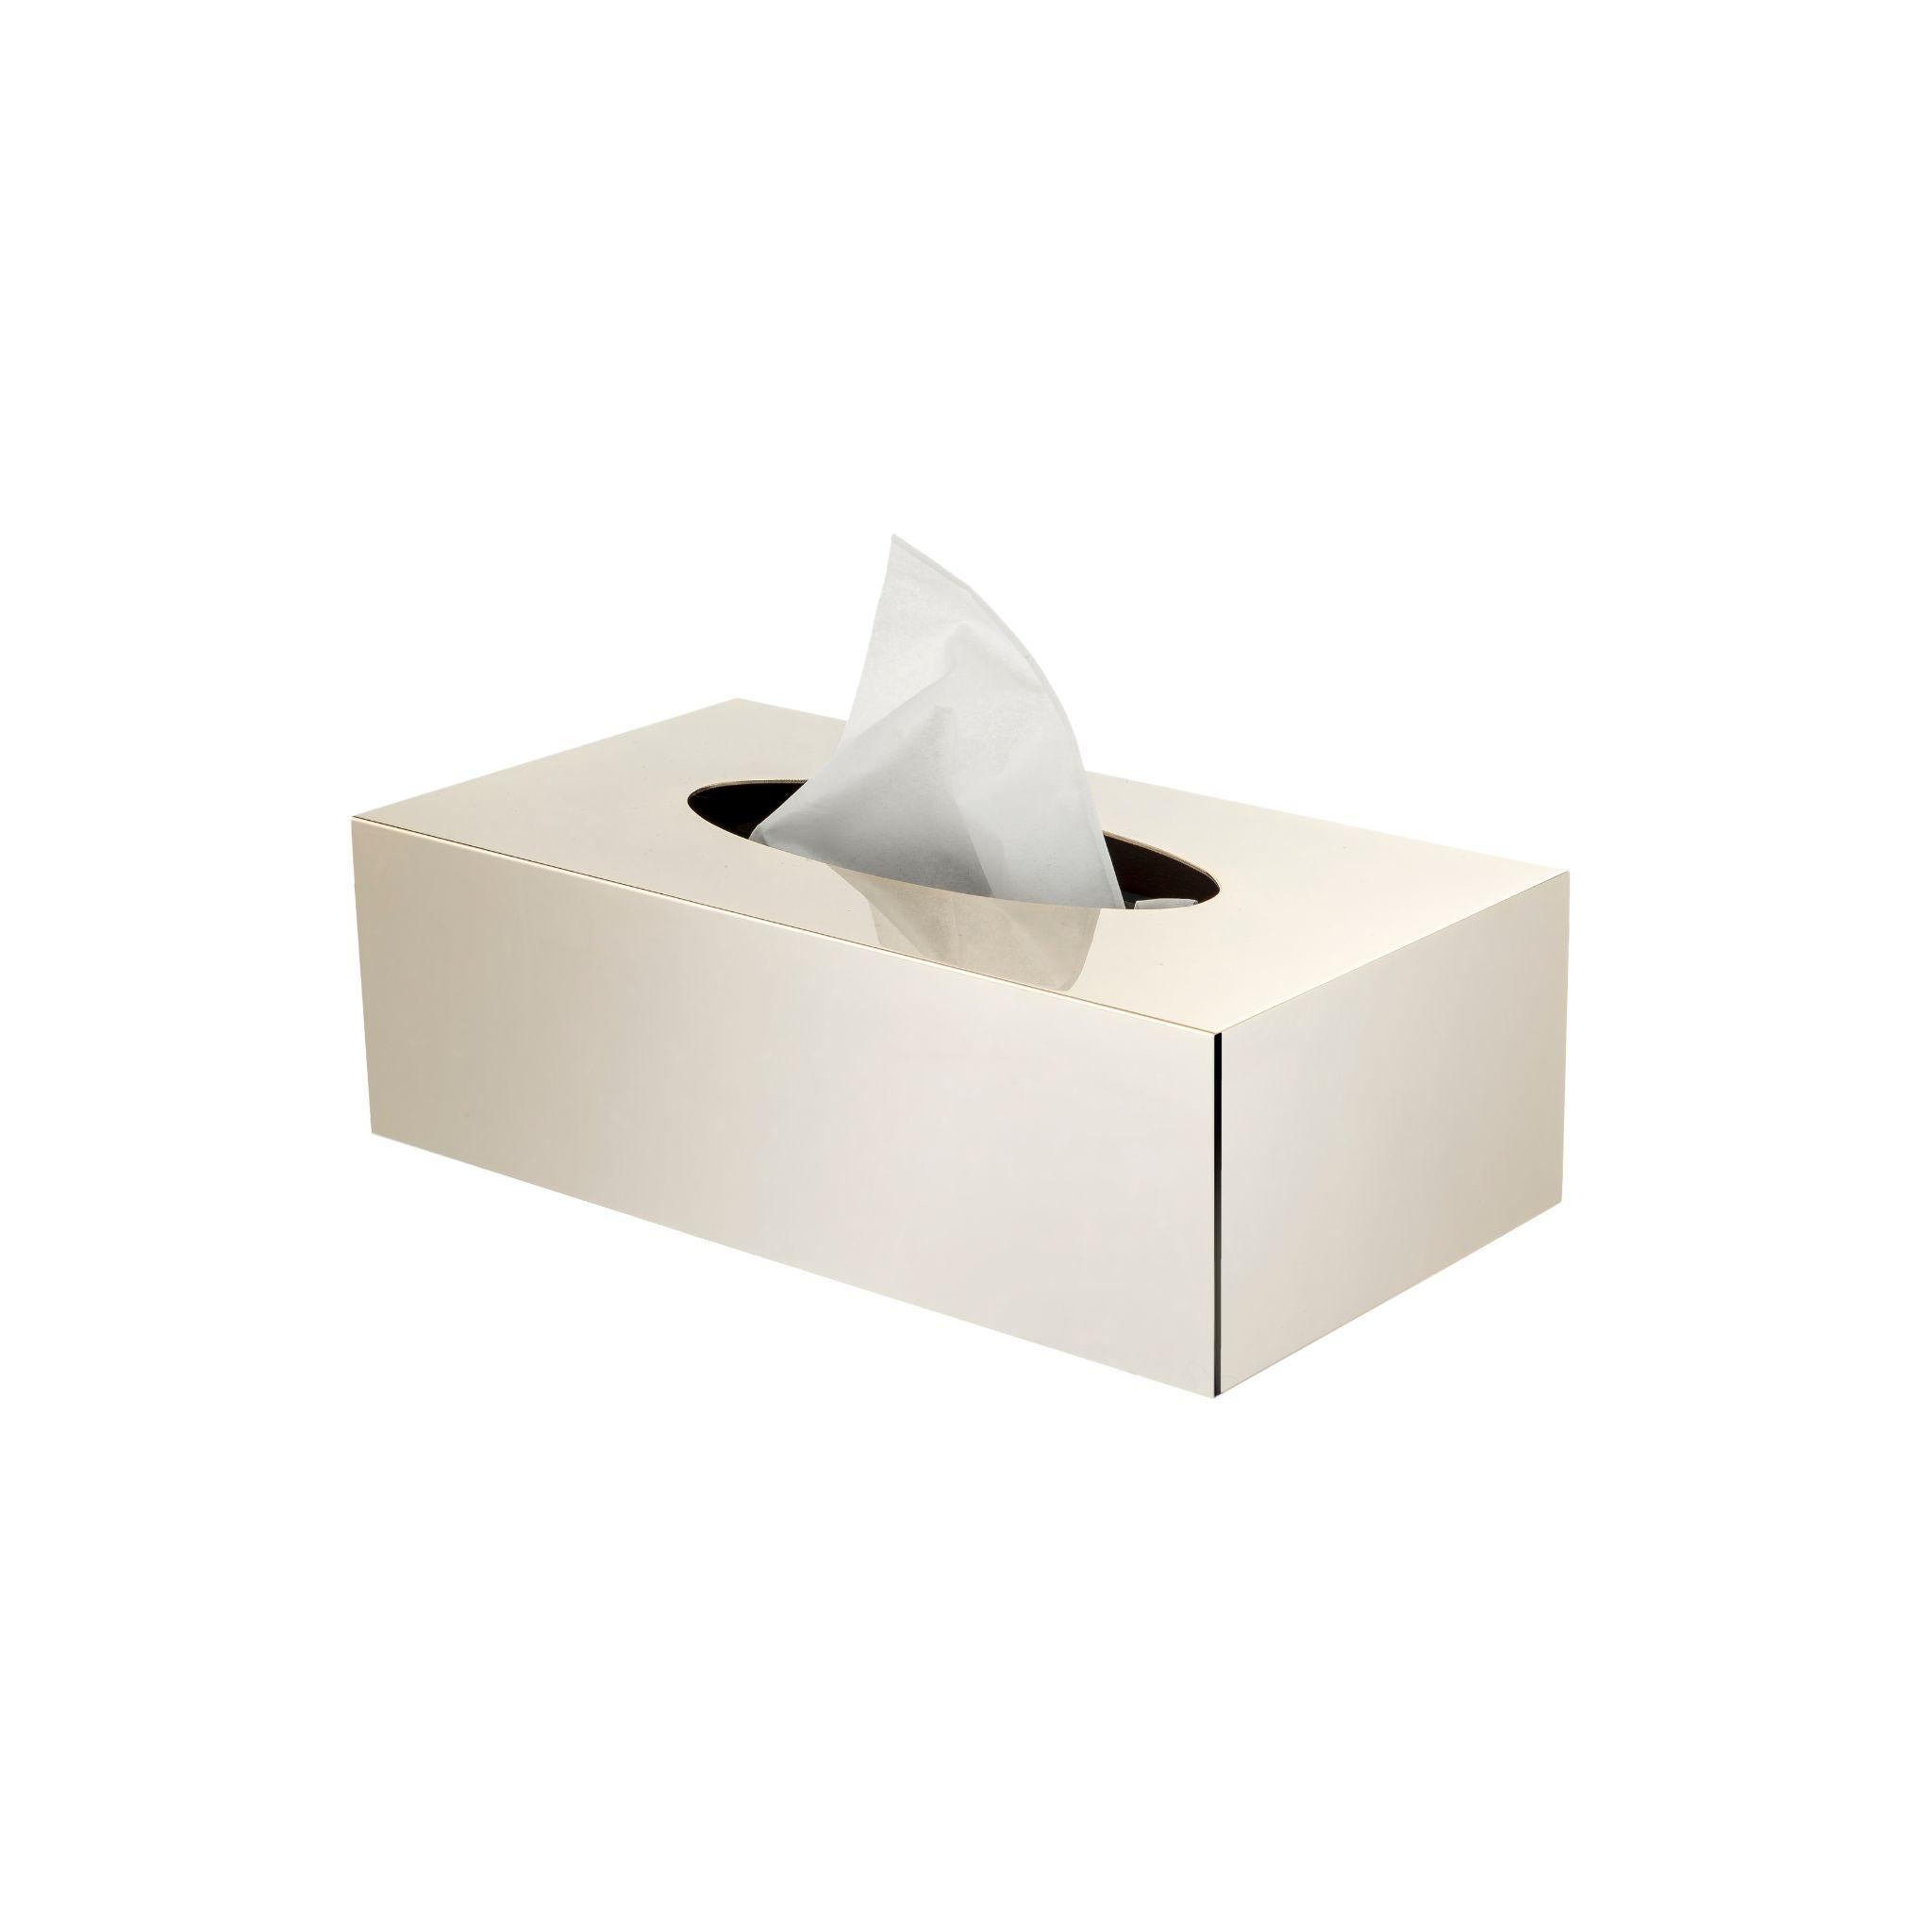 dimensions of a tissue box